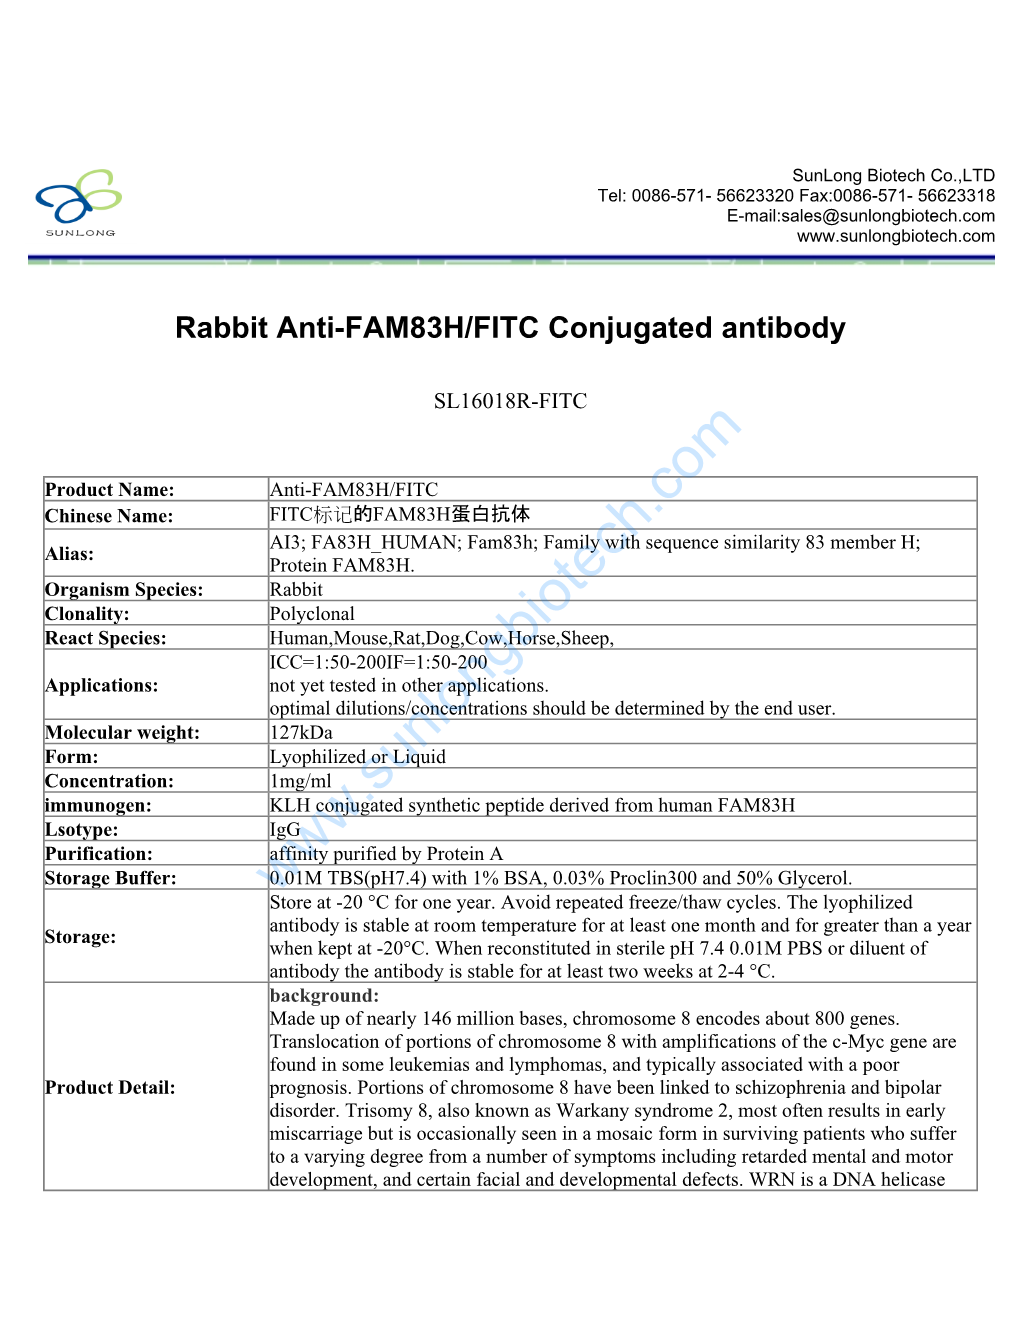 Rabbit Anti-FAM83H/FITC Conjugated Antibody-SL16018R-FITC